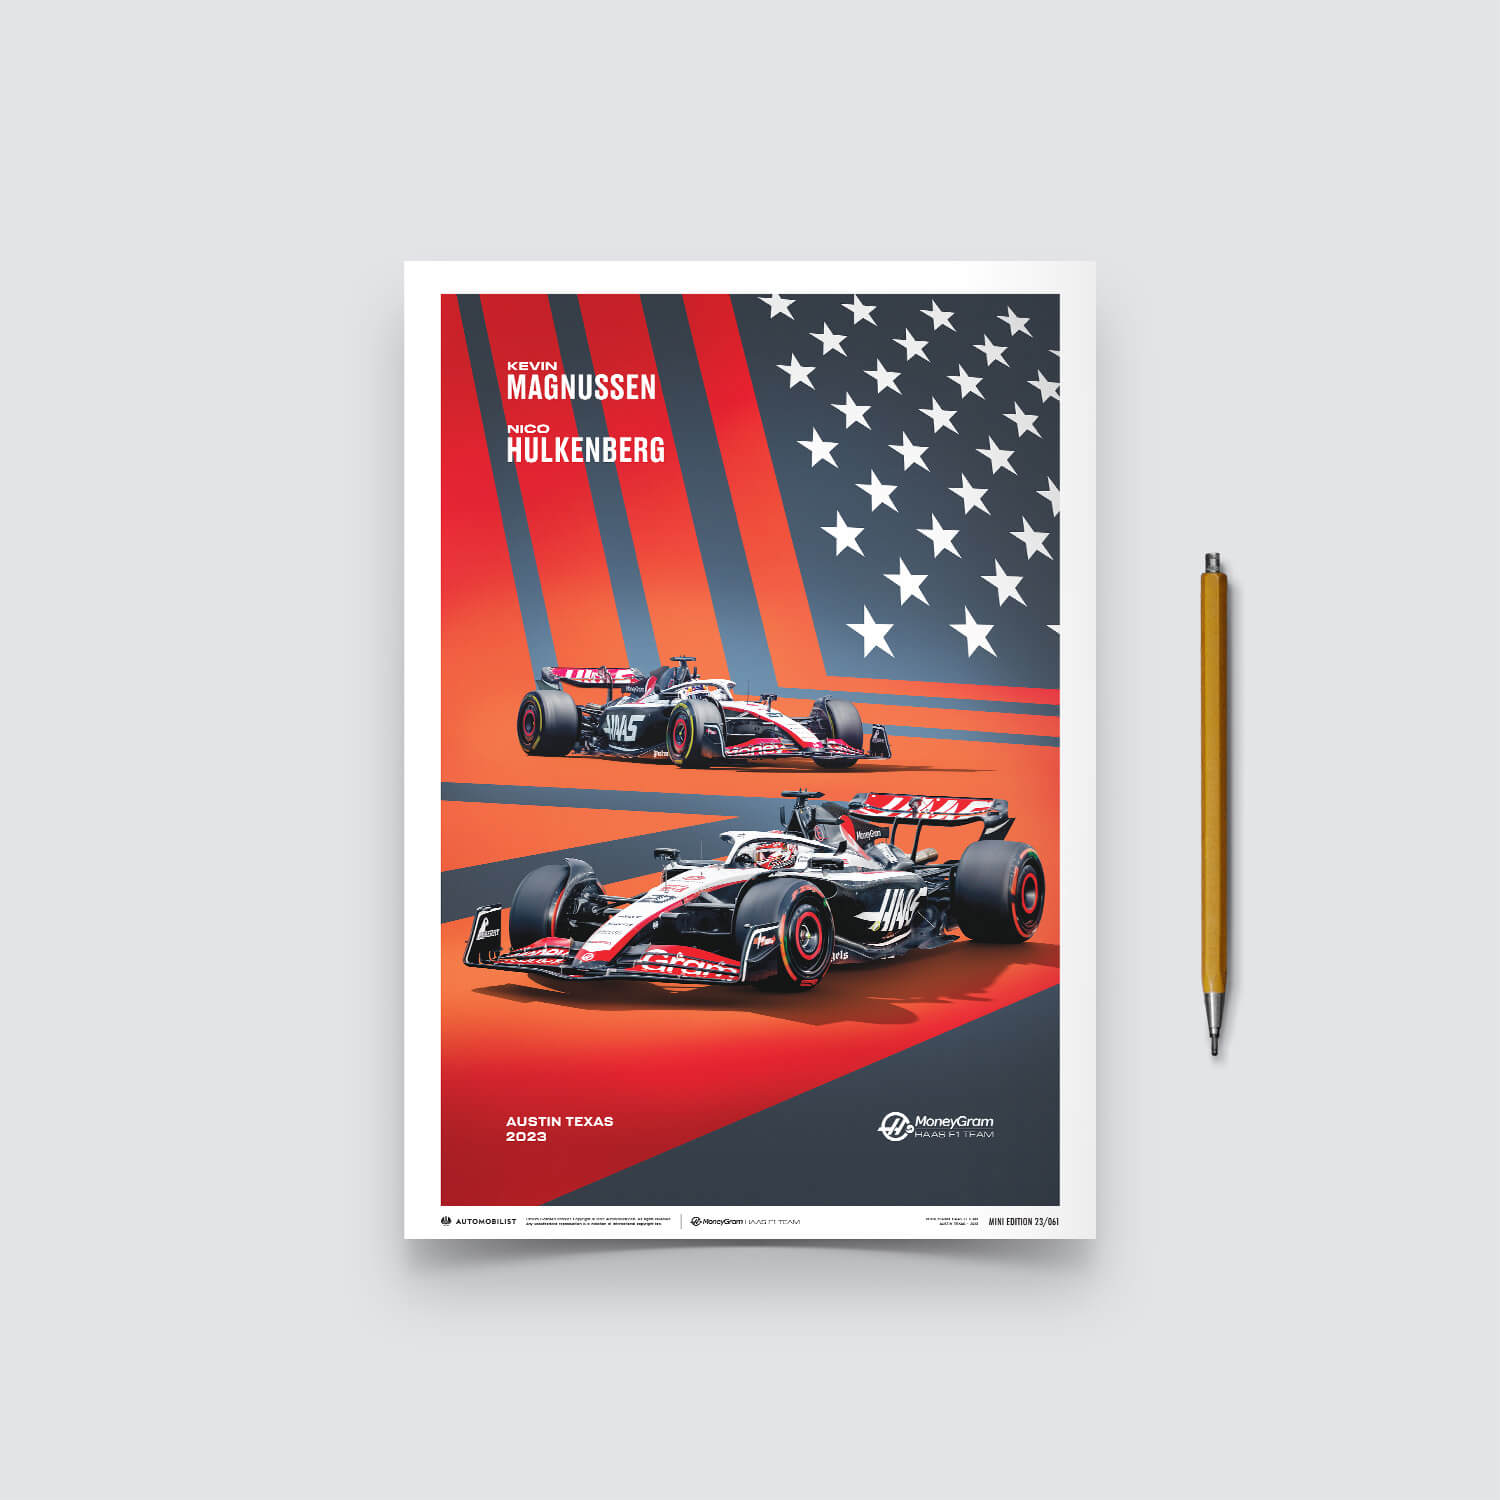 MoneyGram Haas F1 Team - United States Grand Prix - 2023